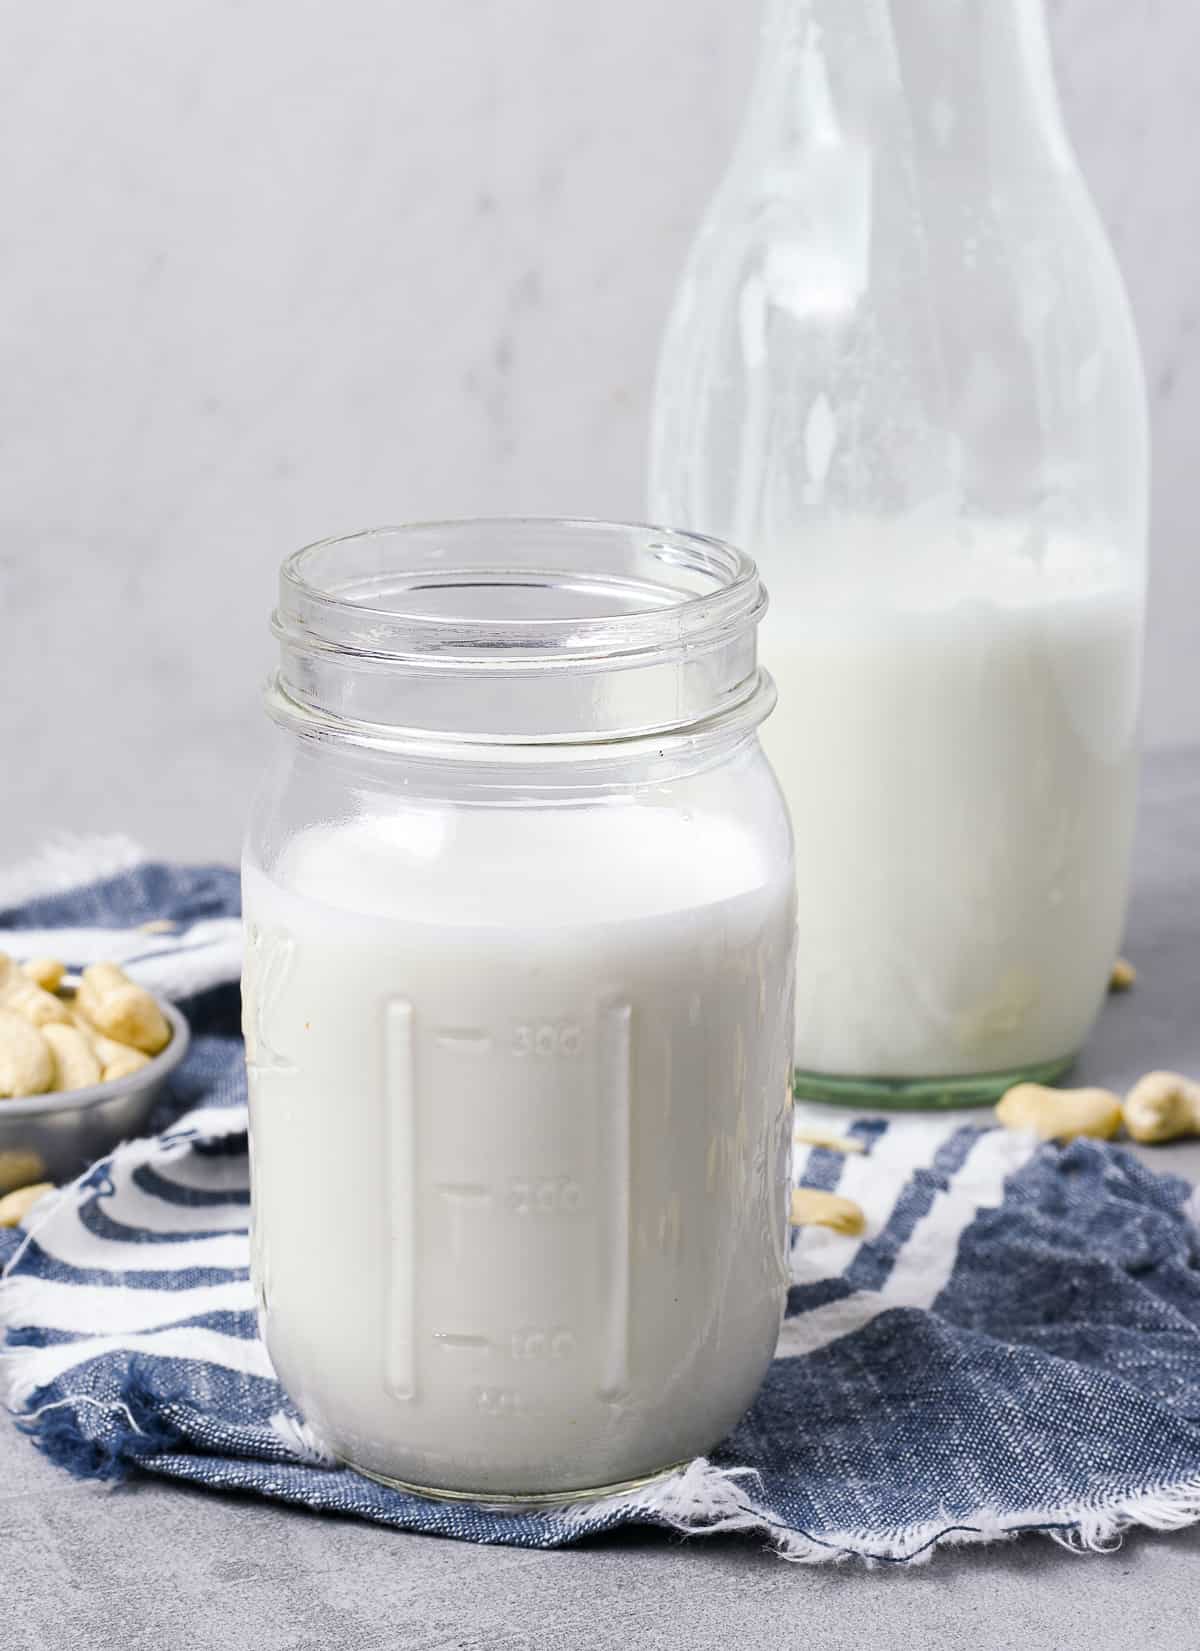 Cashew milk in glass jar and a milk bottle.